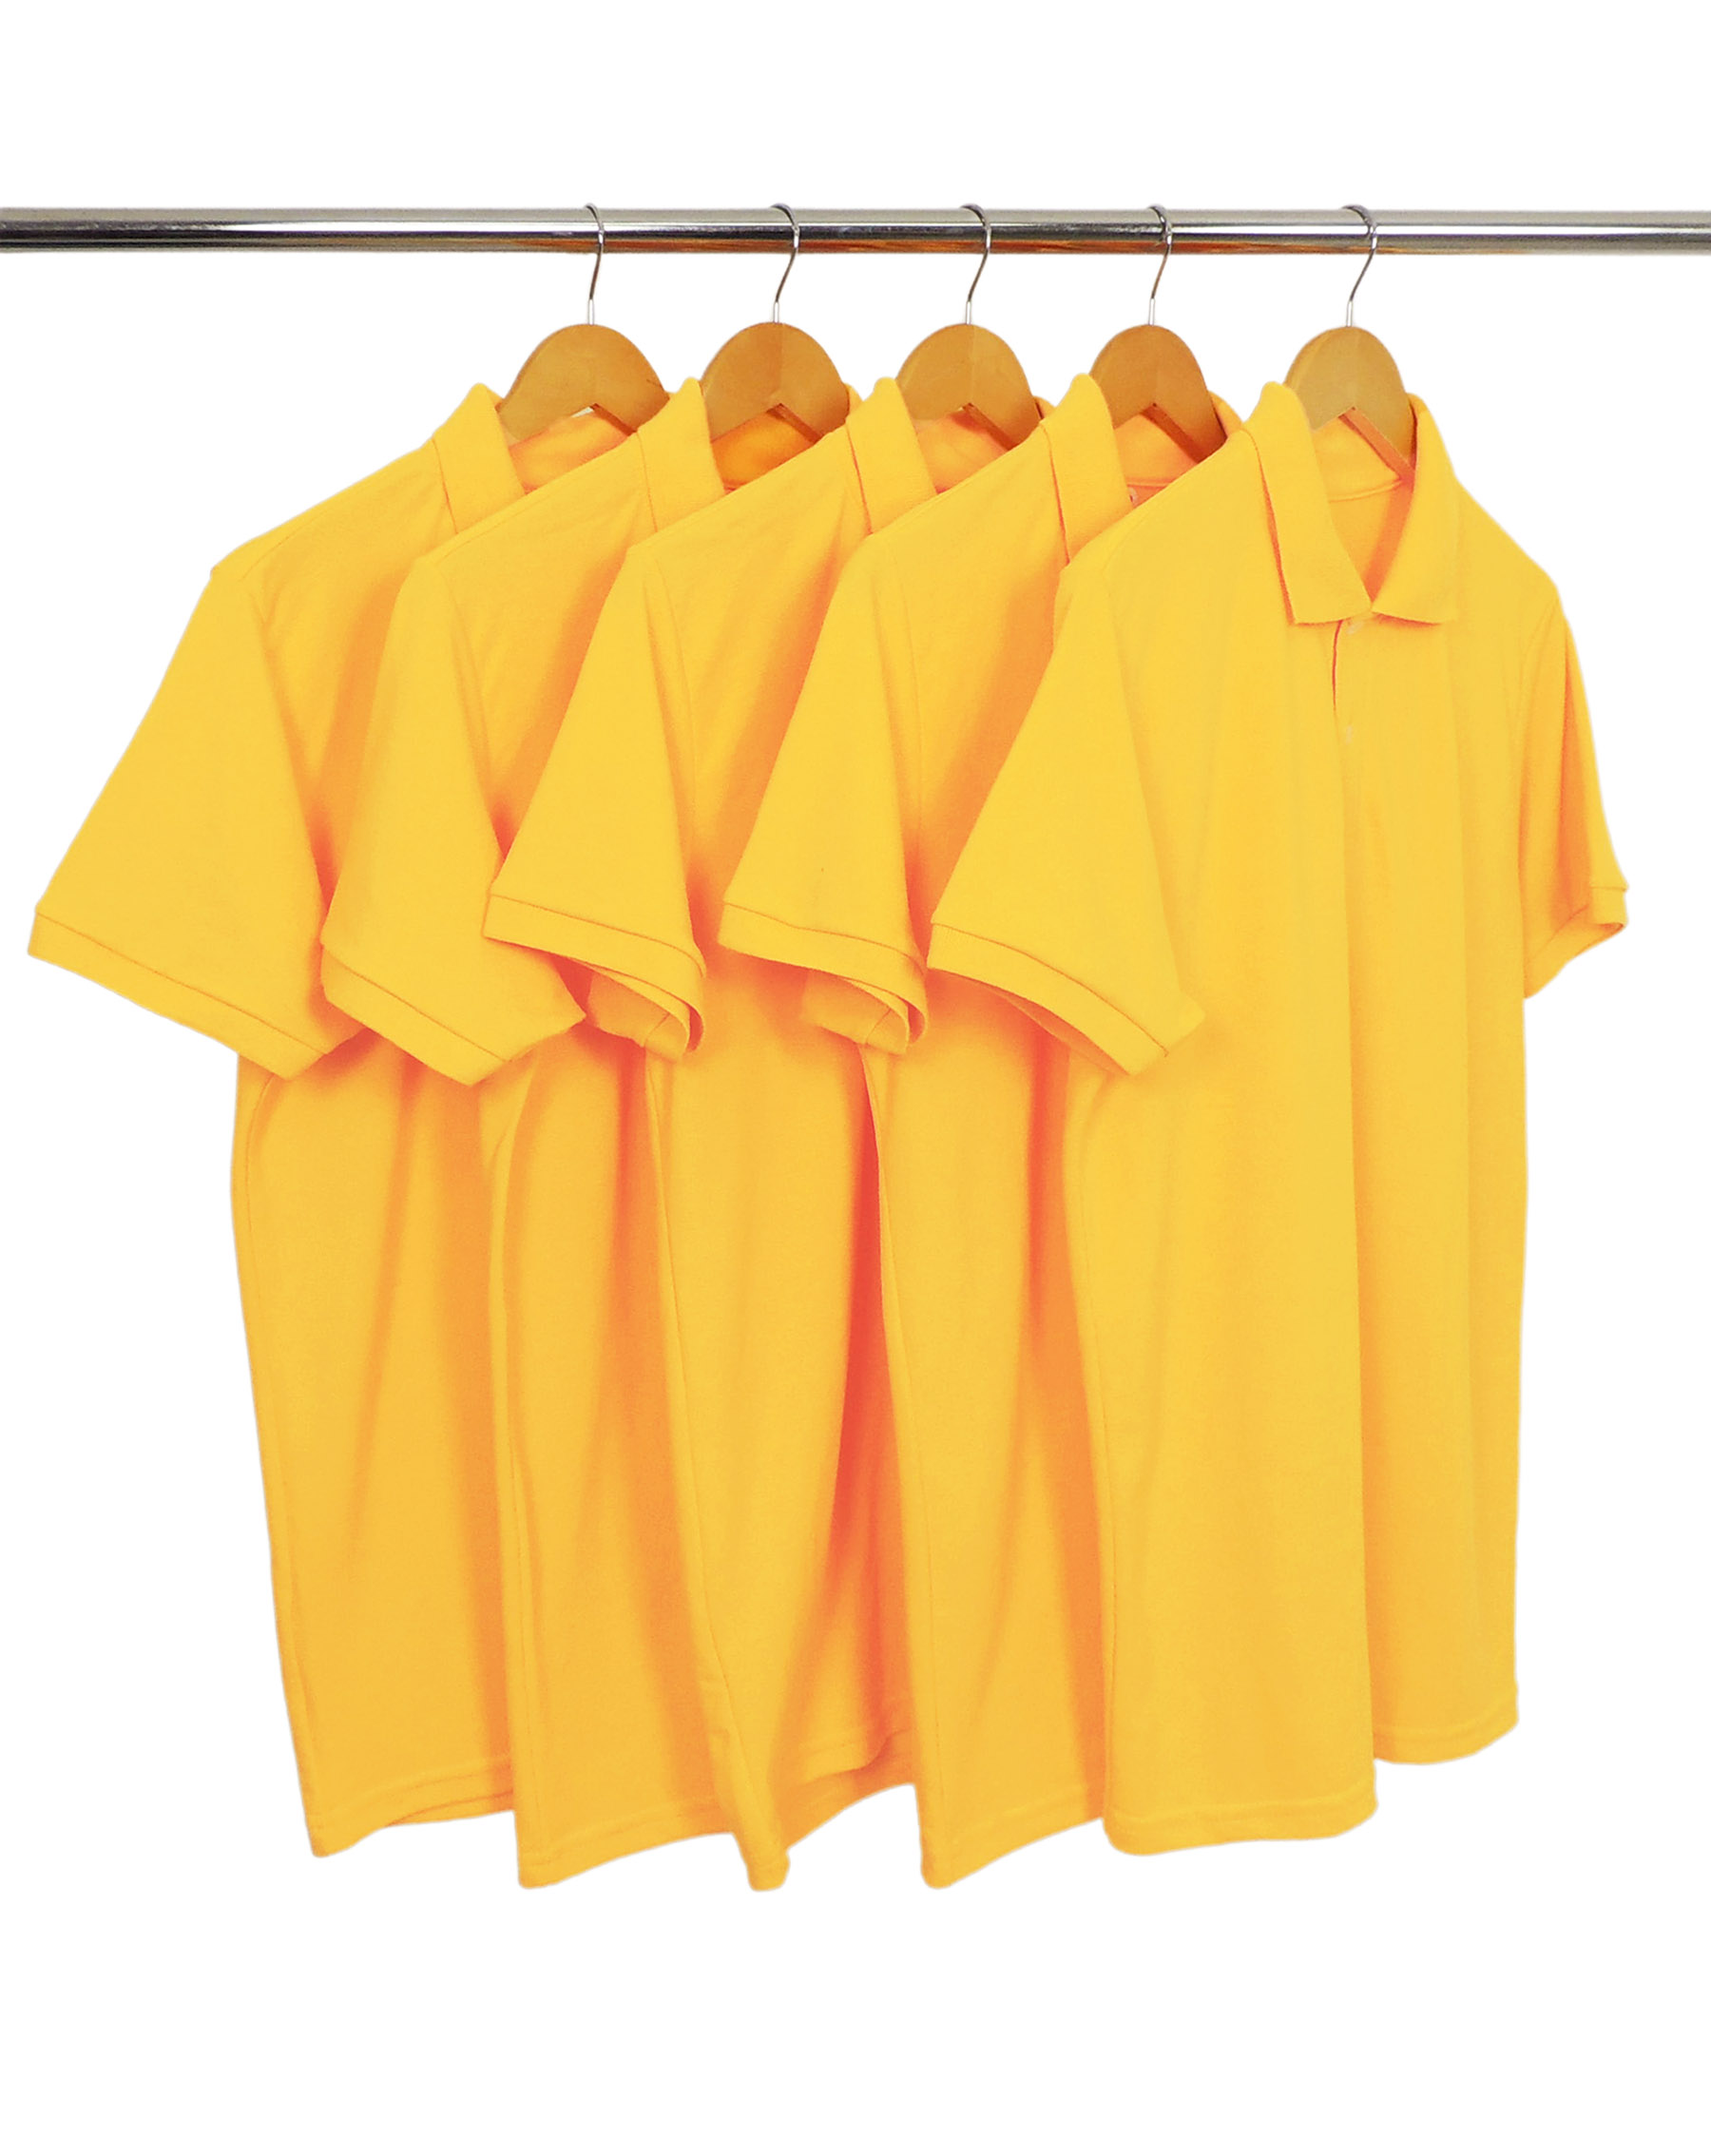 KIT 5 Camisas Polo Piquet Masculina Amarelo Ouro